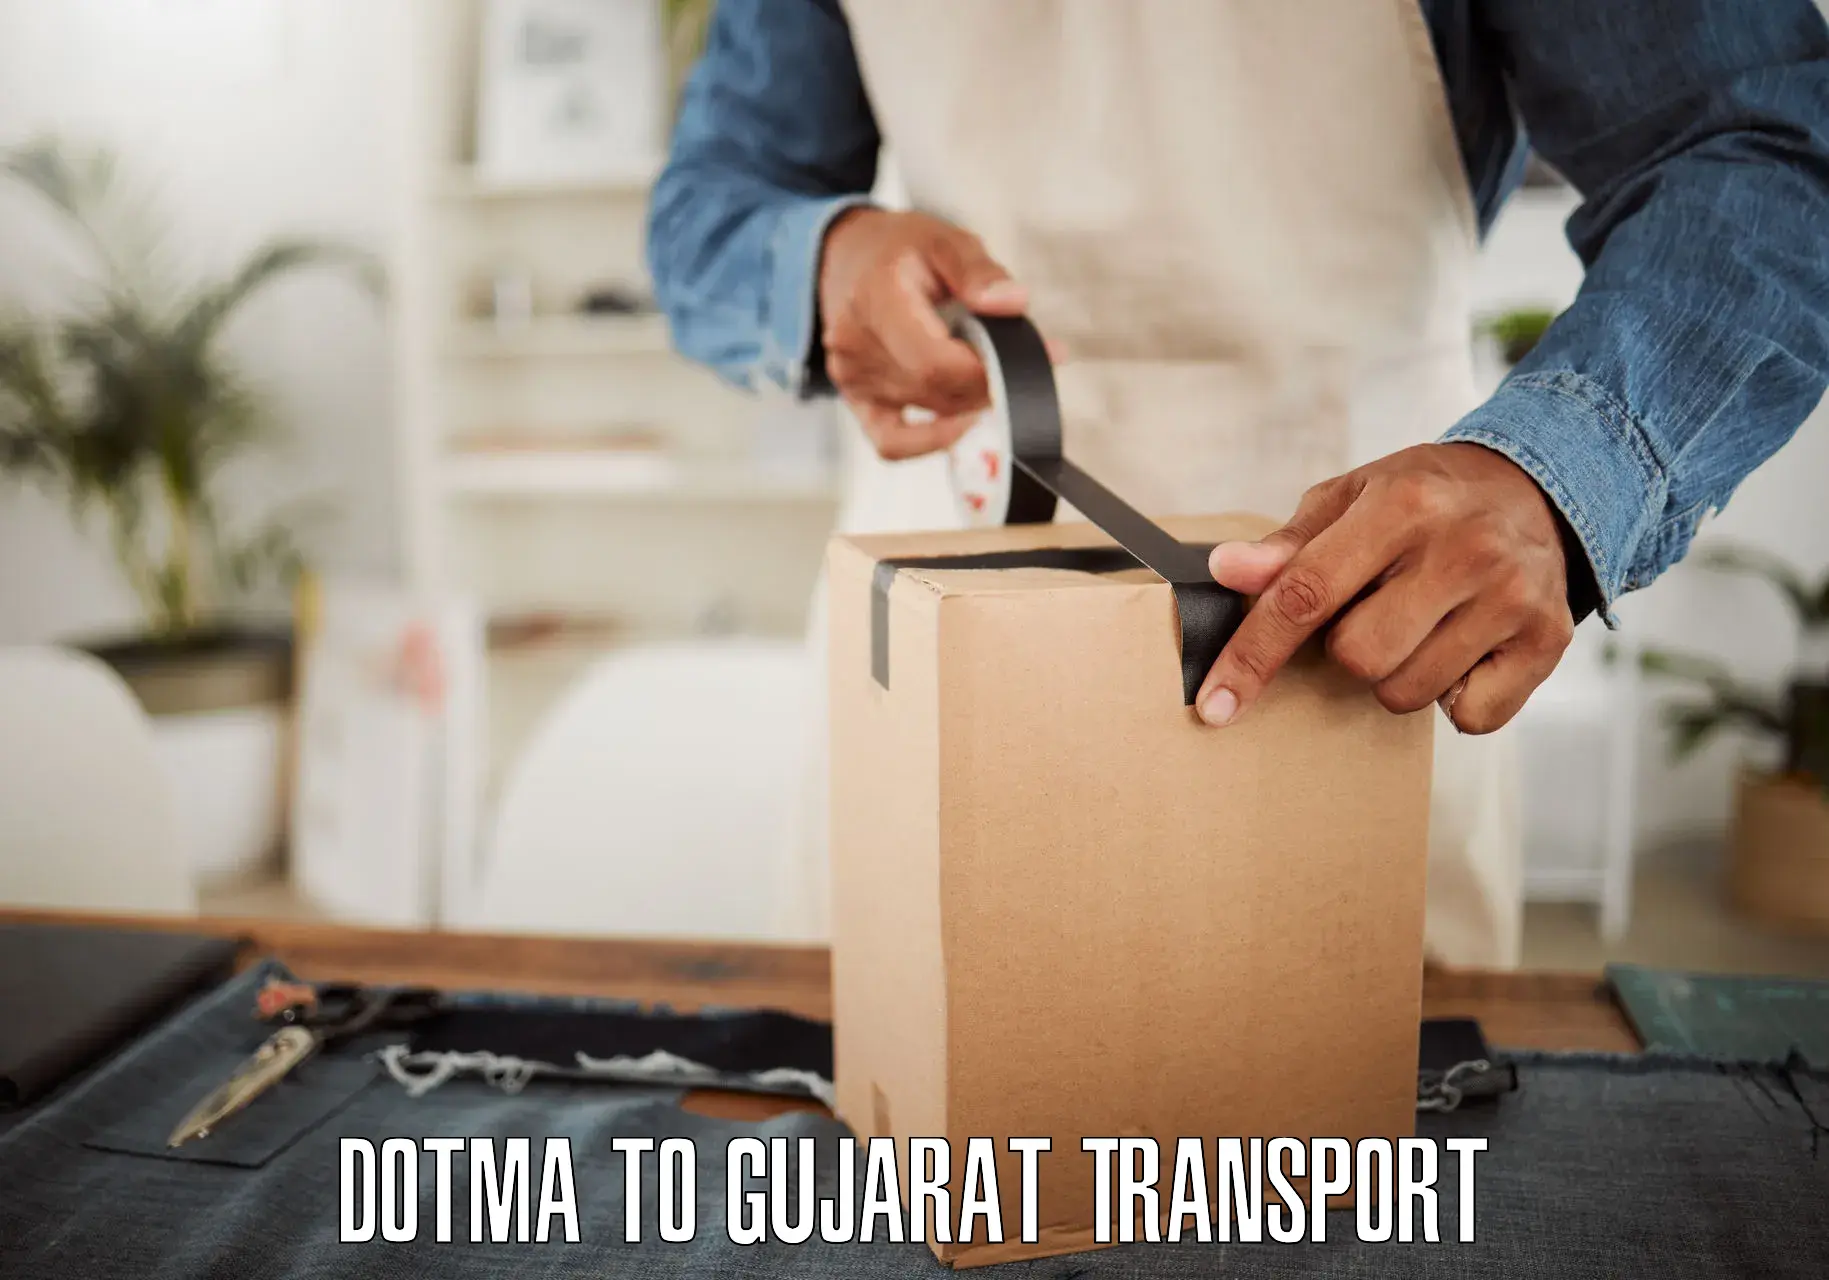 Transport in sharing in Dotma to Mendarda